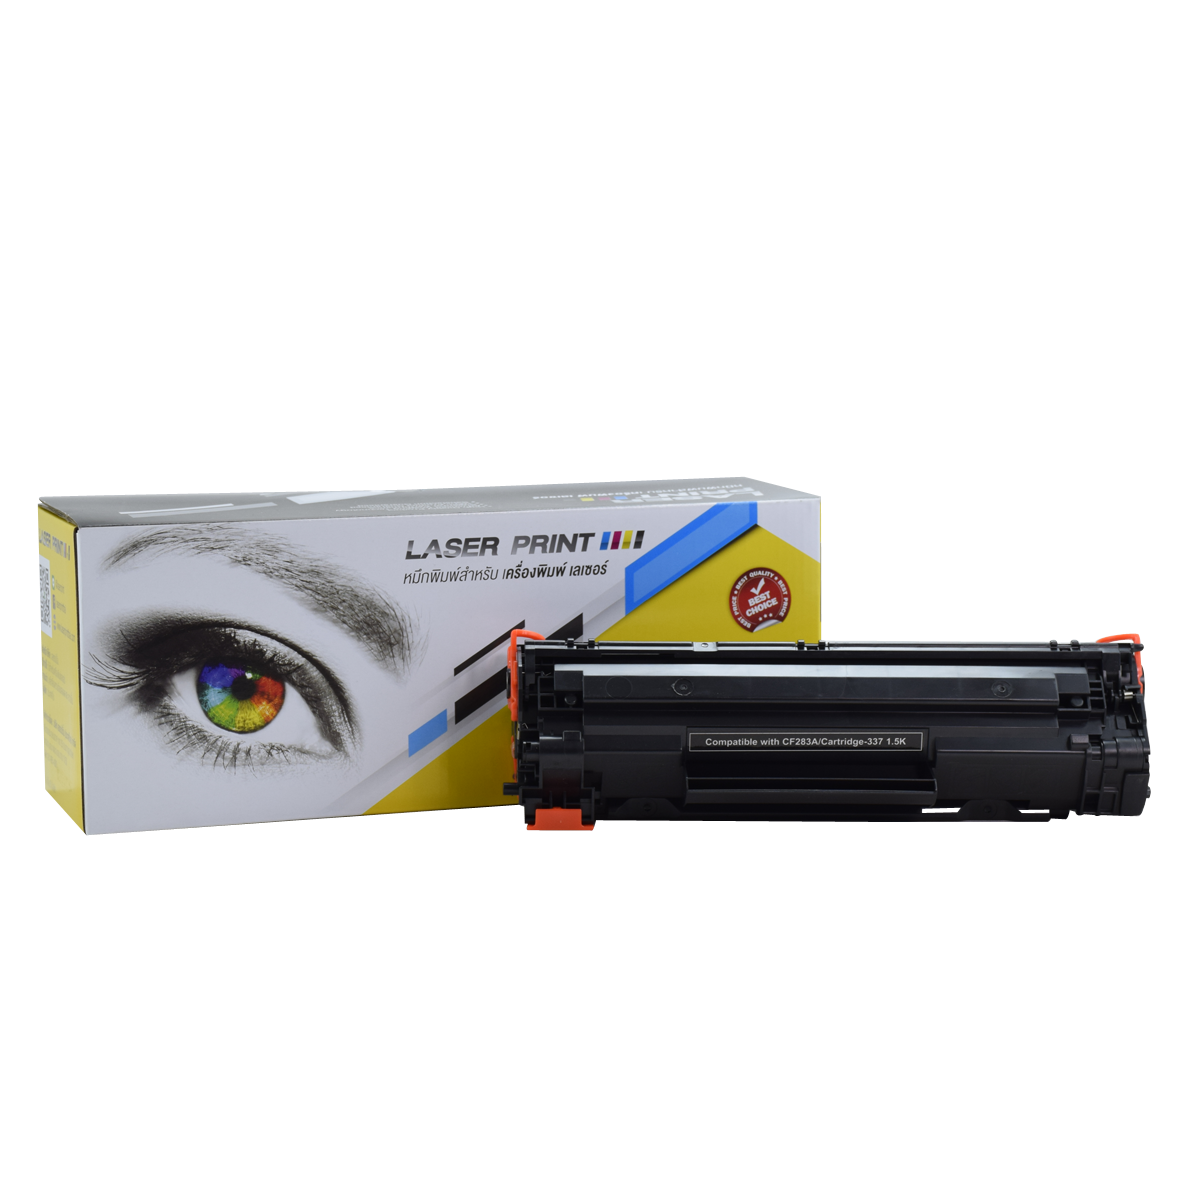 HP CF283A / Canon Cartridge-337 1.5k Laserprint Black